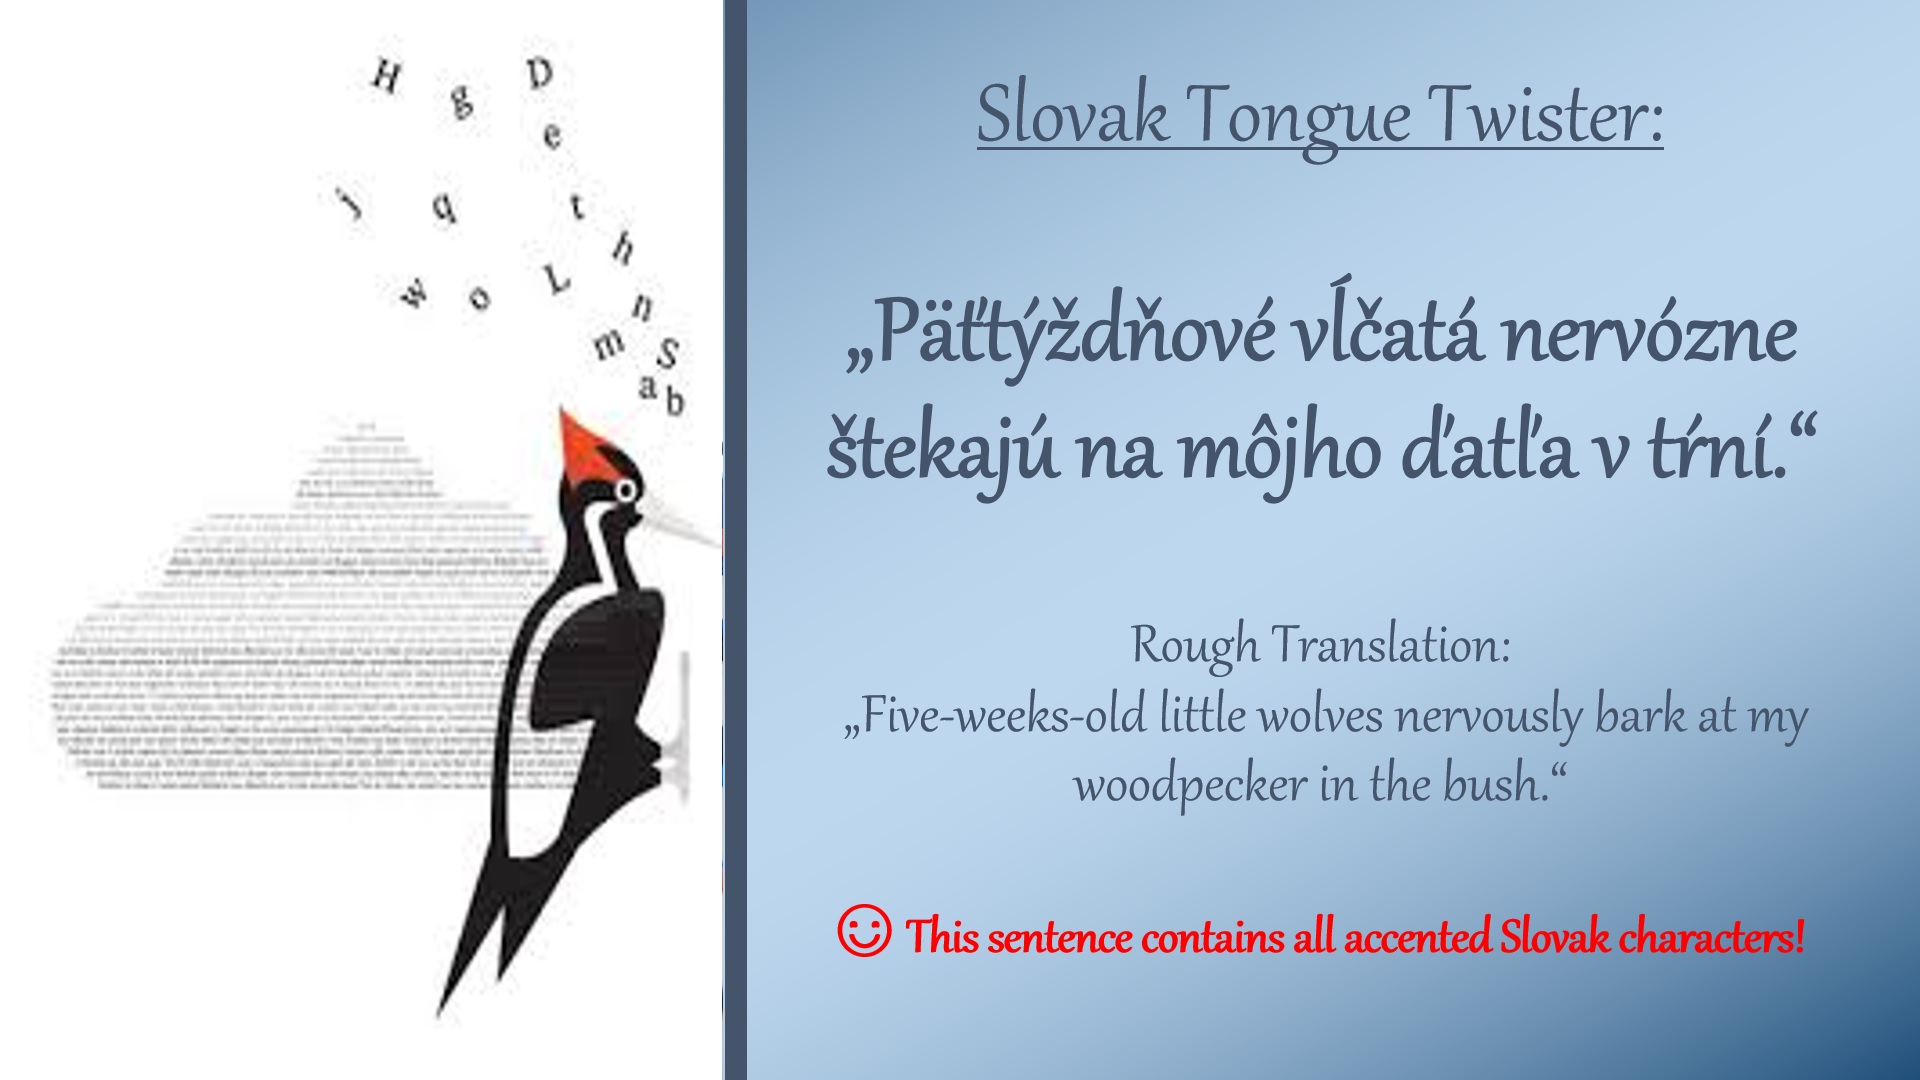 Slovak tongue twister